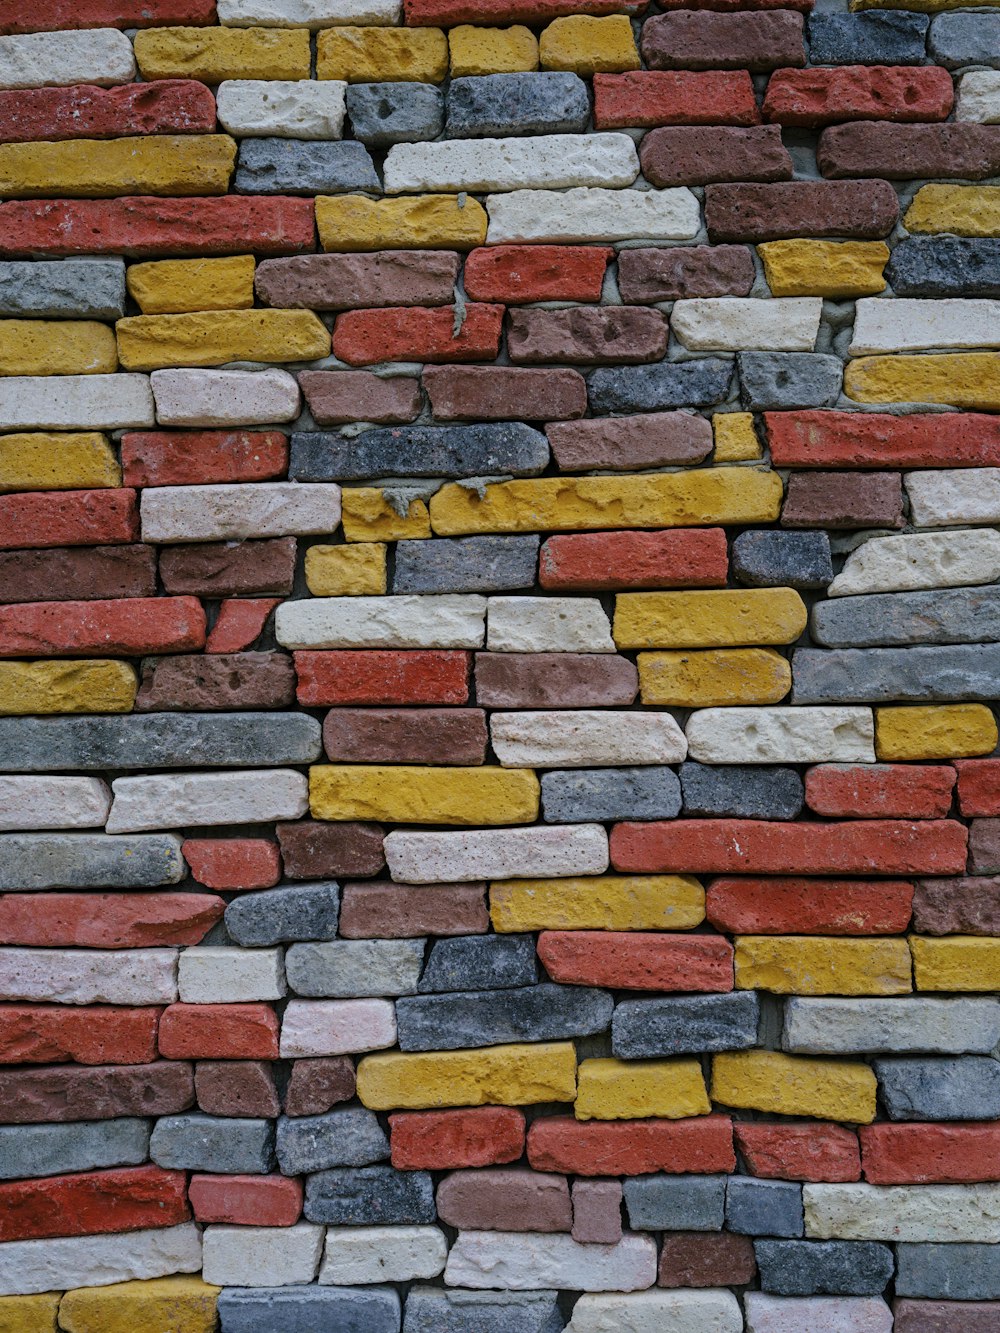 a close up of a brick wall made of rocks